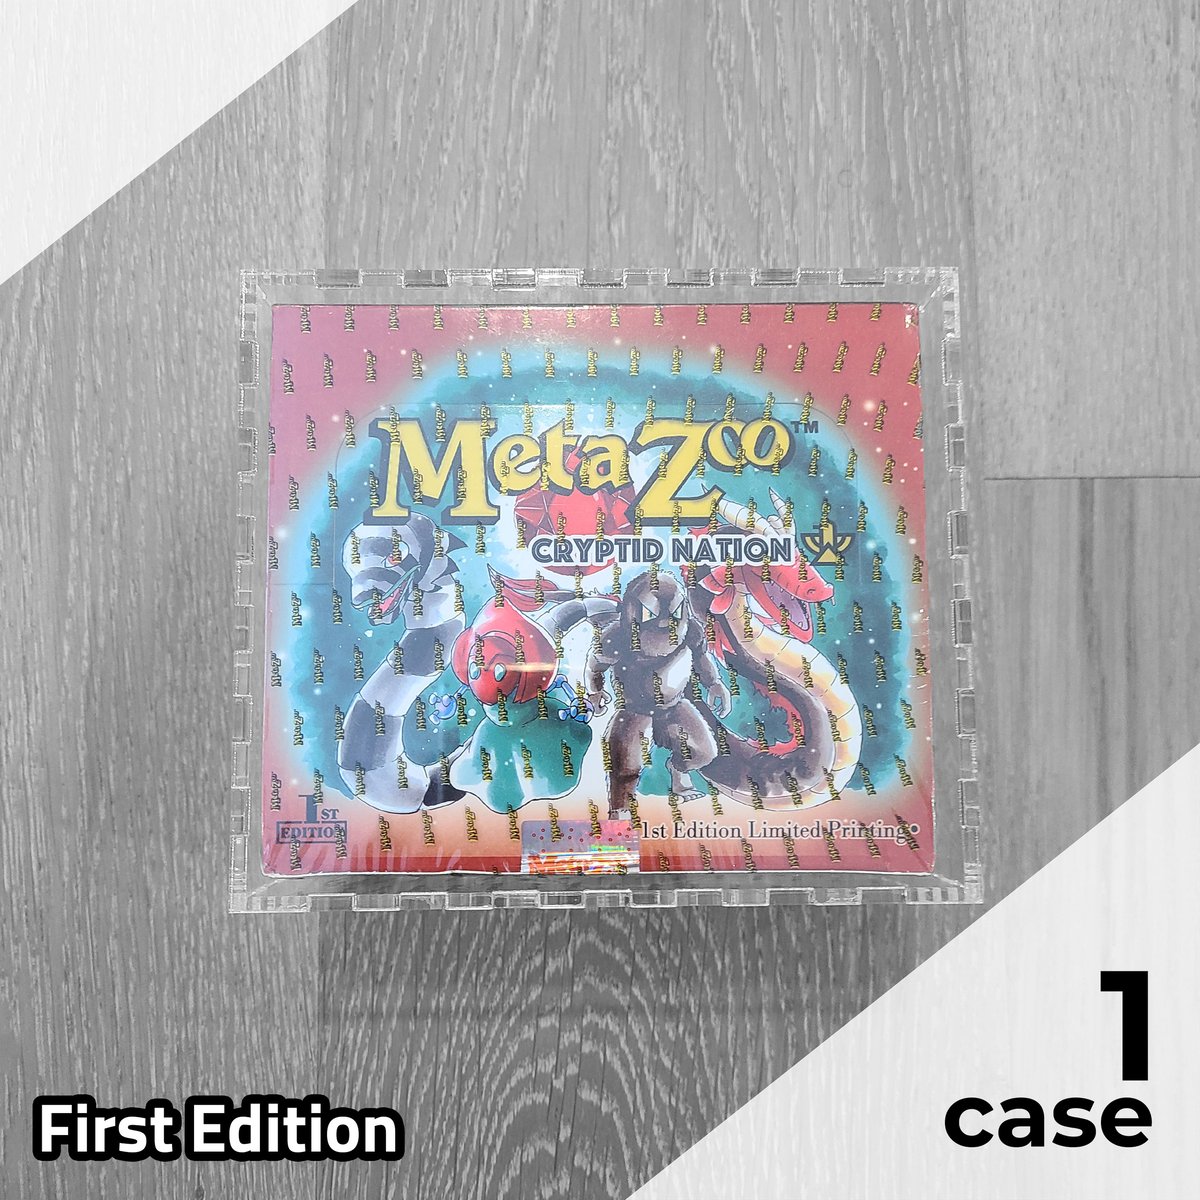 MetaZoo Nightfall Pin Collection Display Box